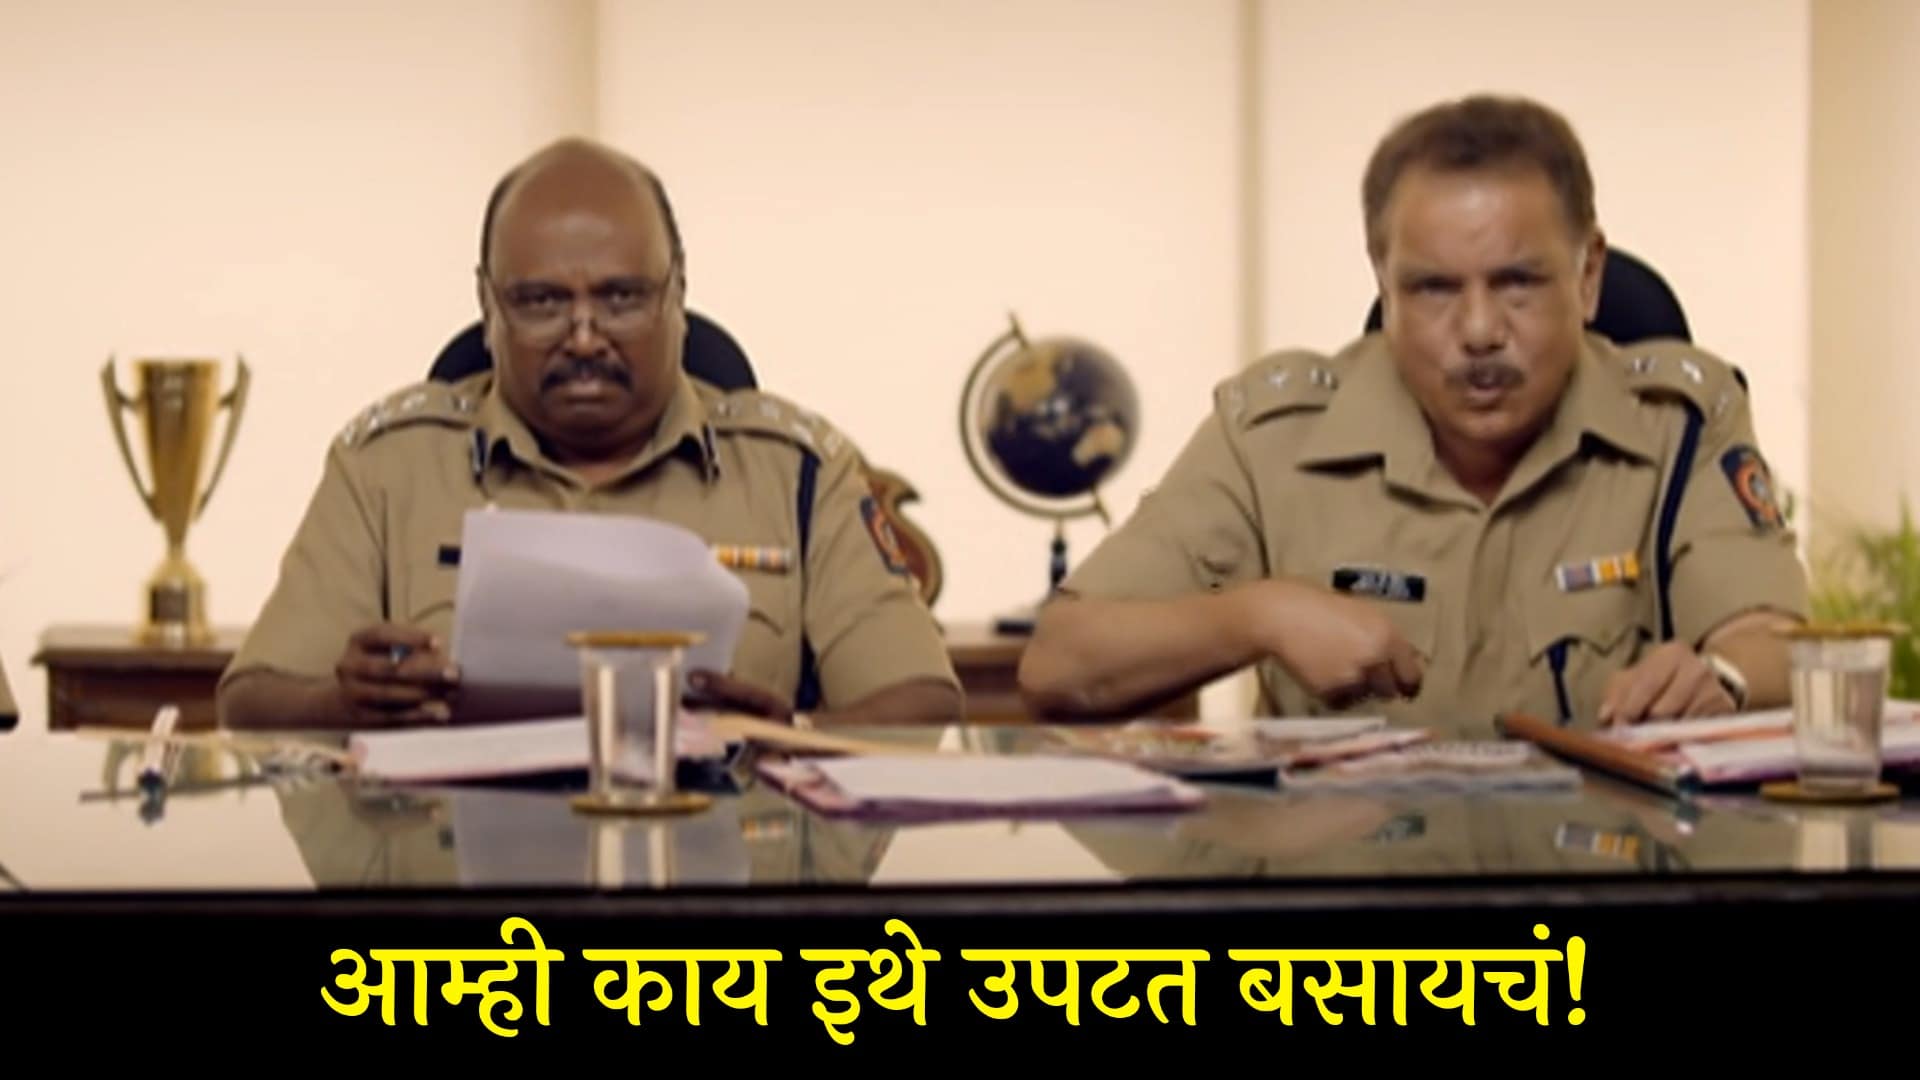 Anant Jog Rege Marathi Movie Dialogues Meme Templates 